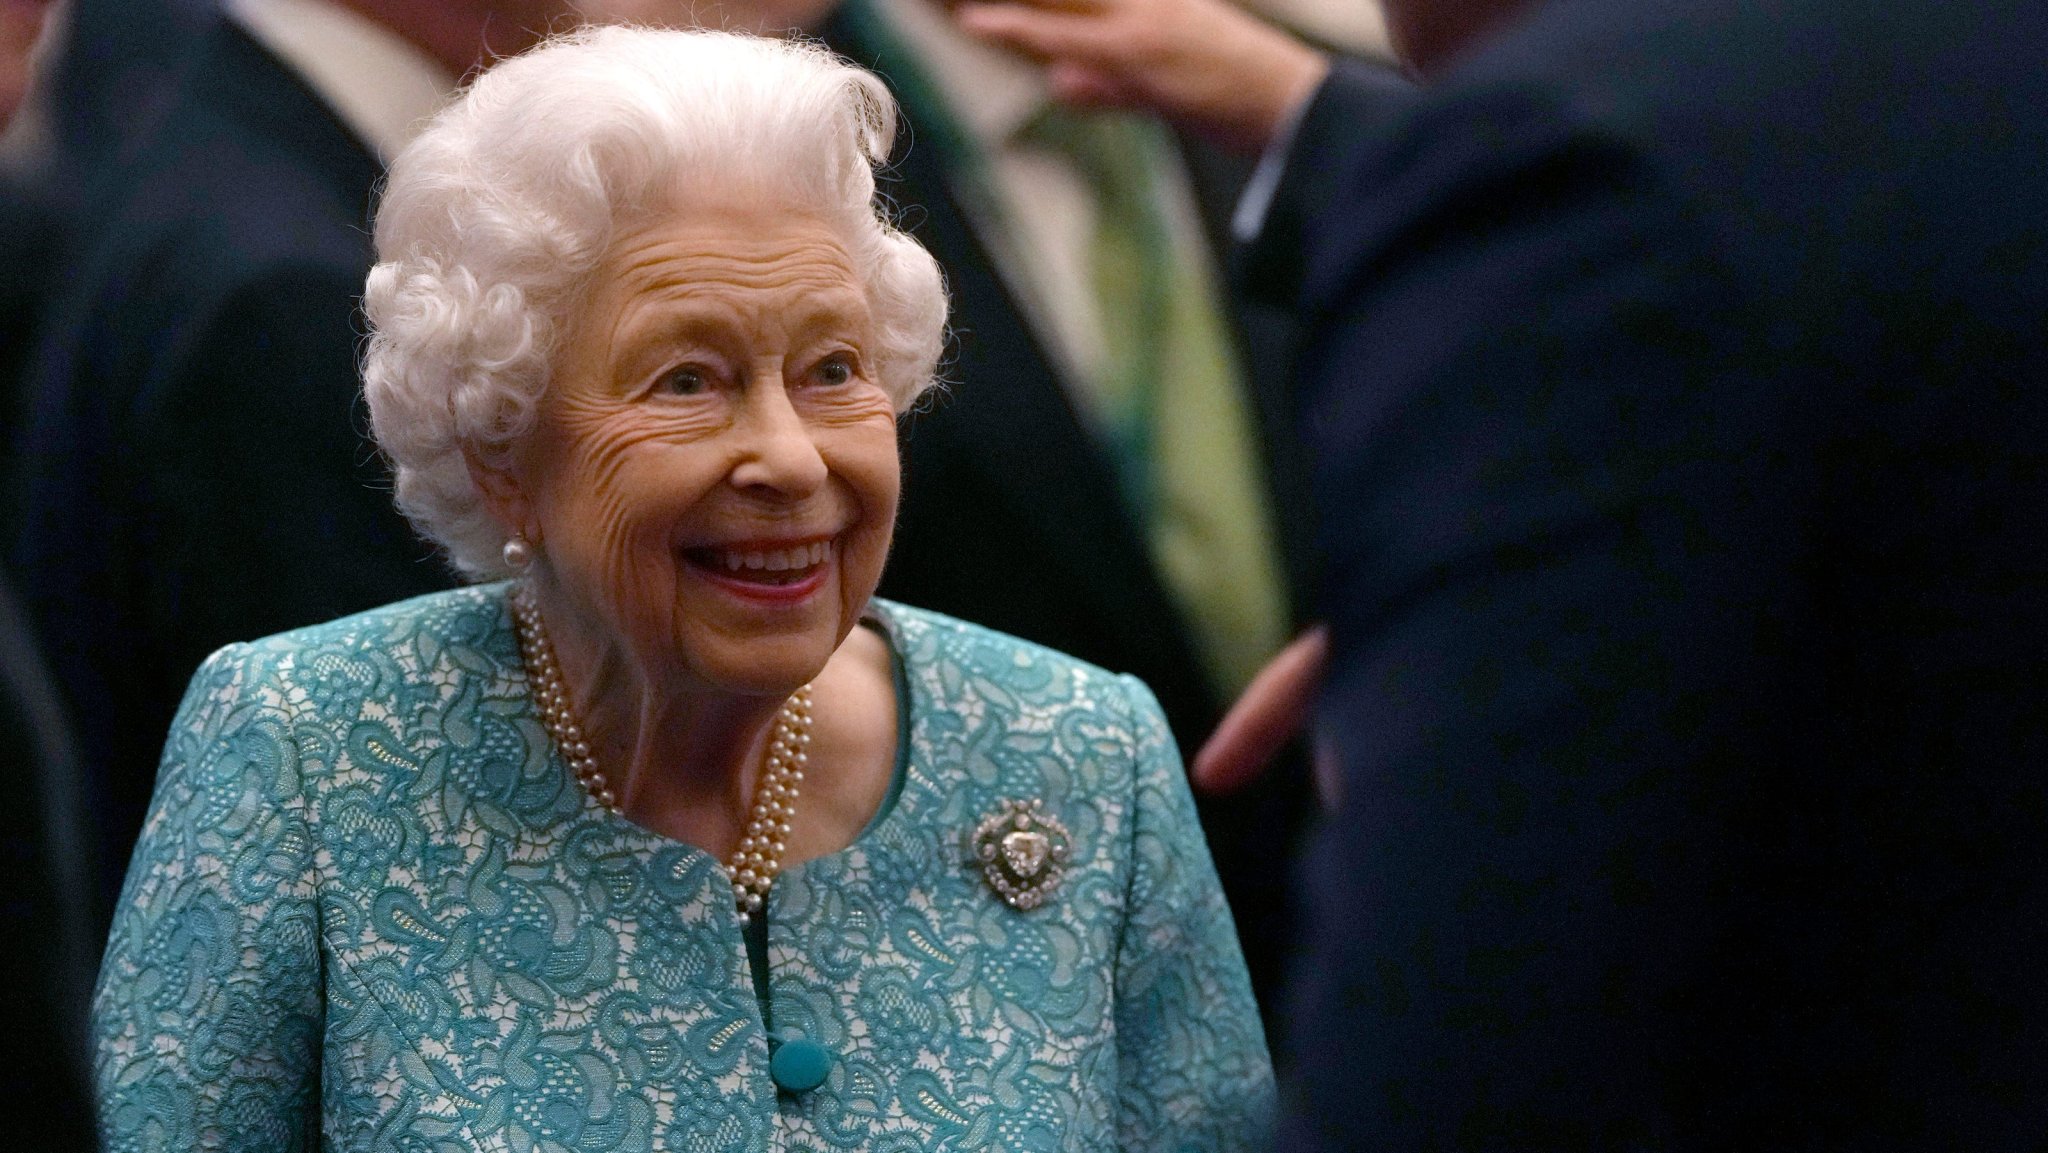 Queen Elizabeth II dies at 96: A timeline of her life, royal reign